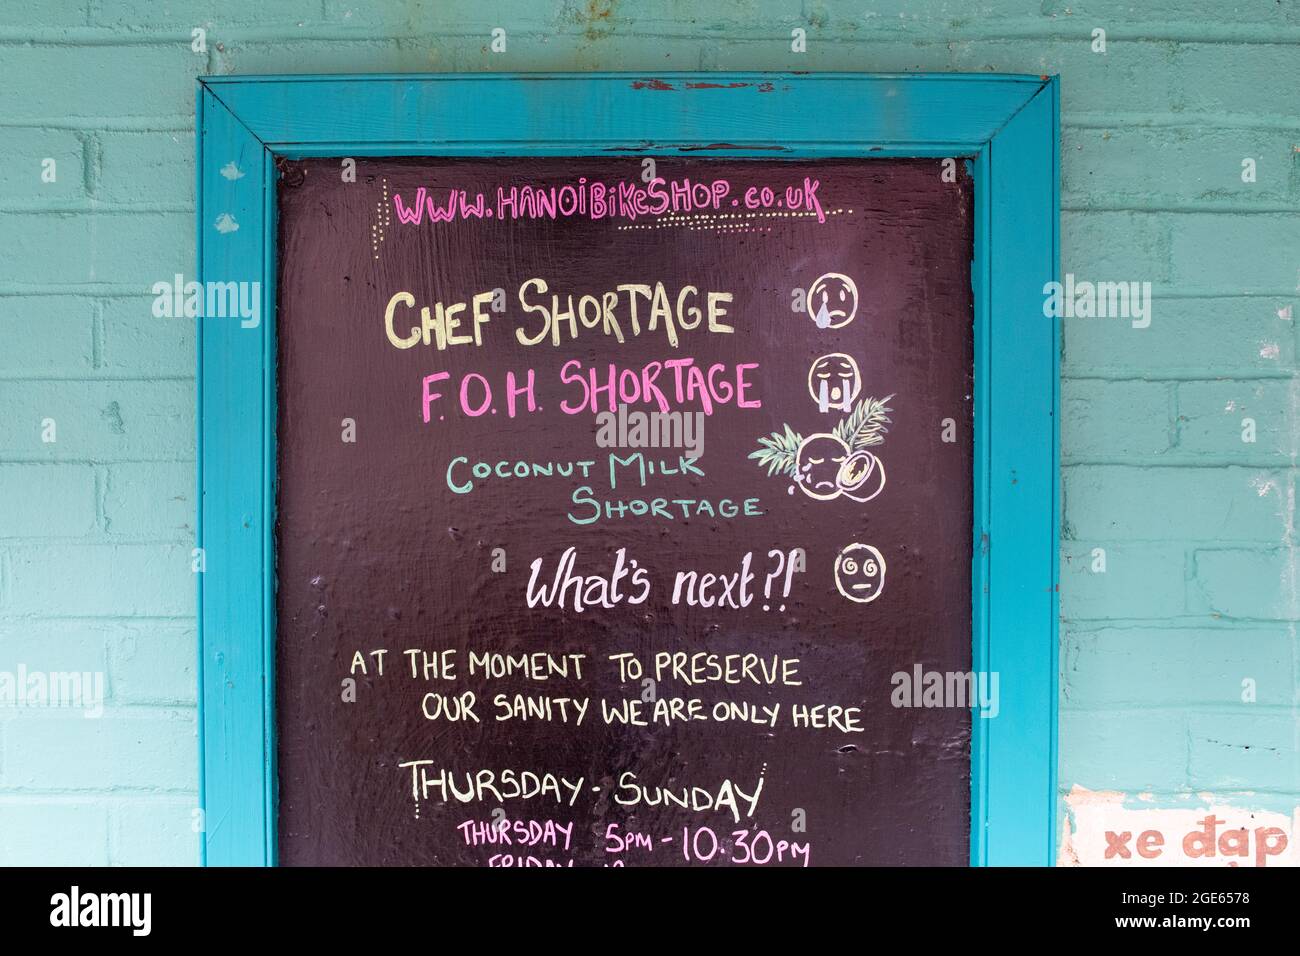 Hospitality recruitment crisis - Chef Shortage, Front of House shortage sign - post brexit and covid pandemic - Hanoi Bike Shop, Glasgow, Scotland, UK Stock Photo